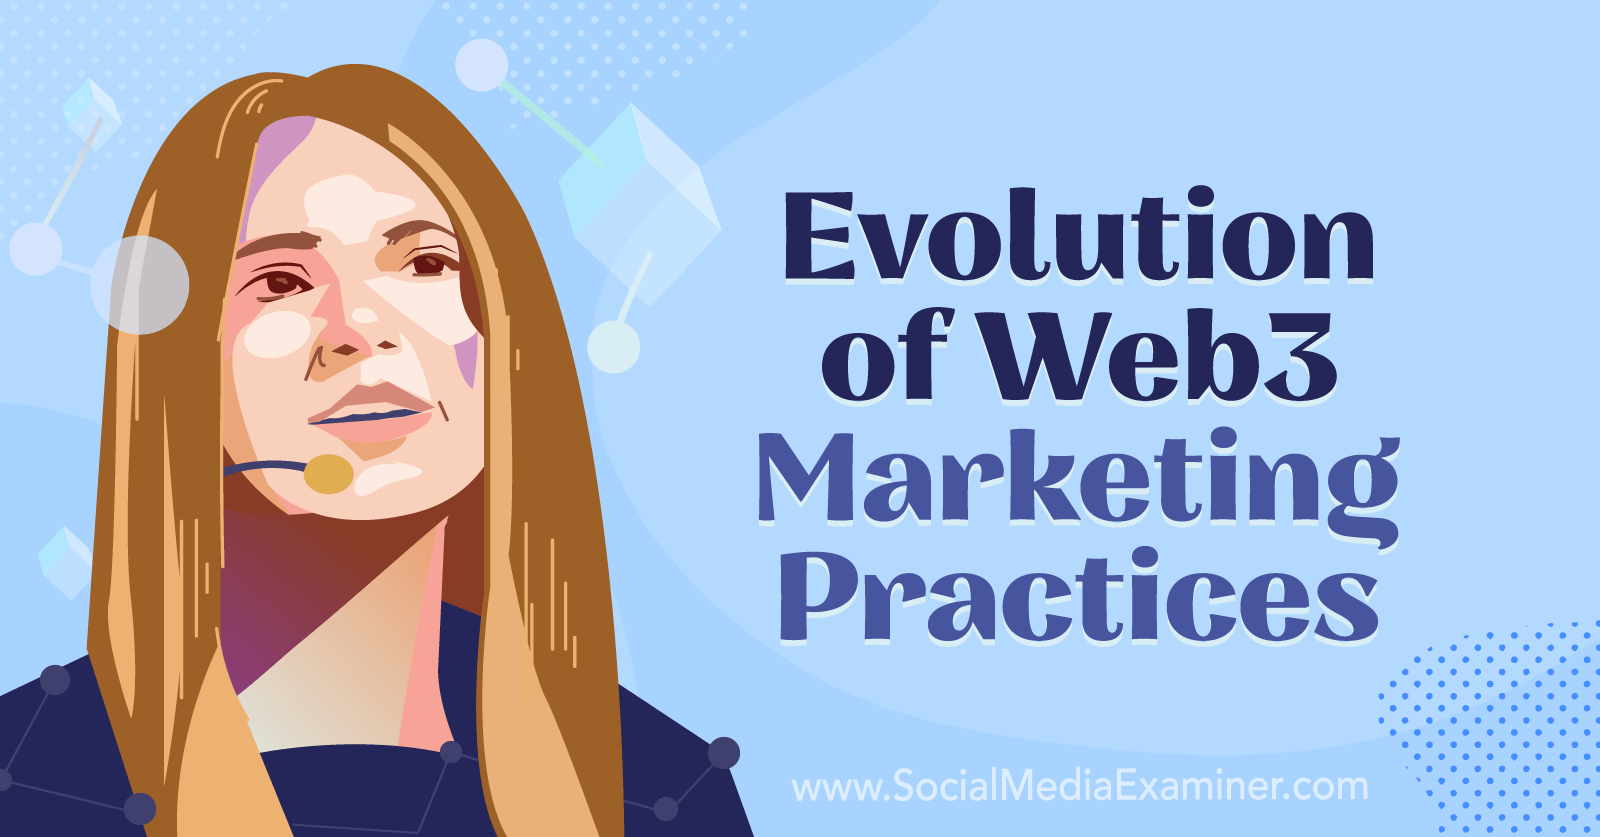 Evolution of Web3 Marketing Practices-Social Media Examiner